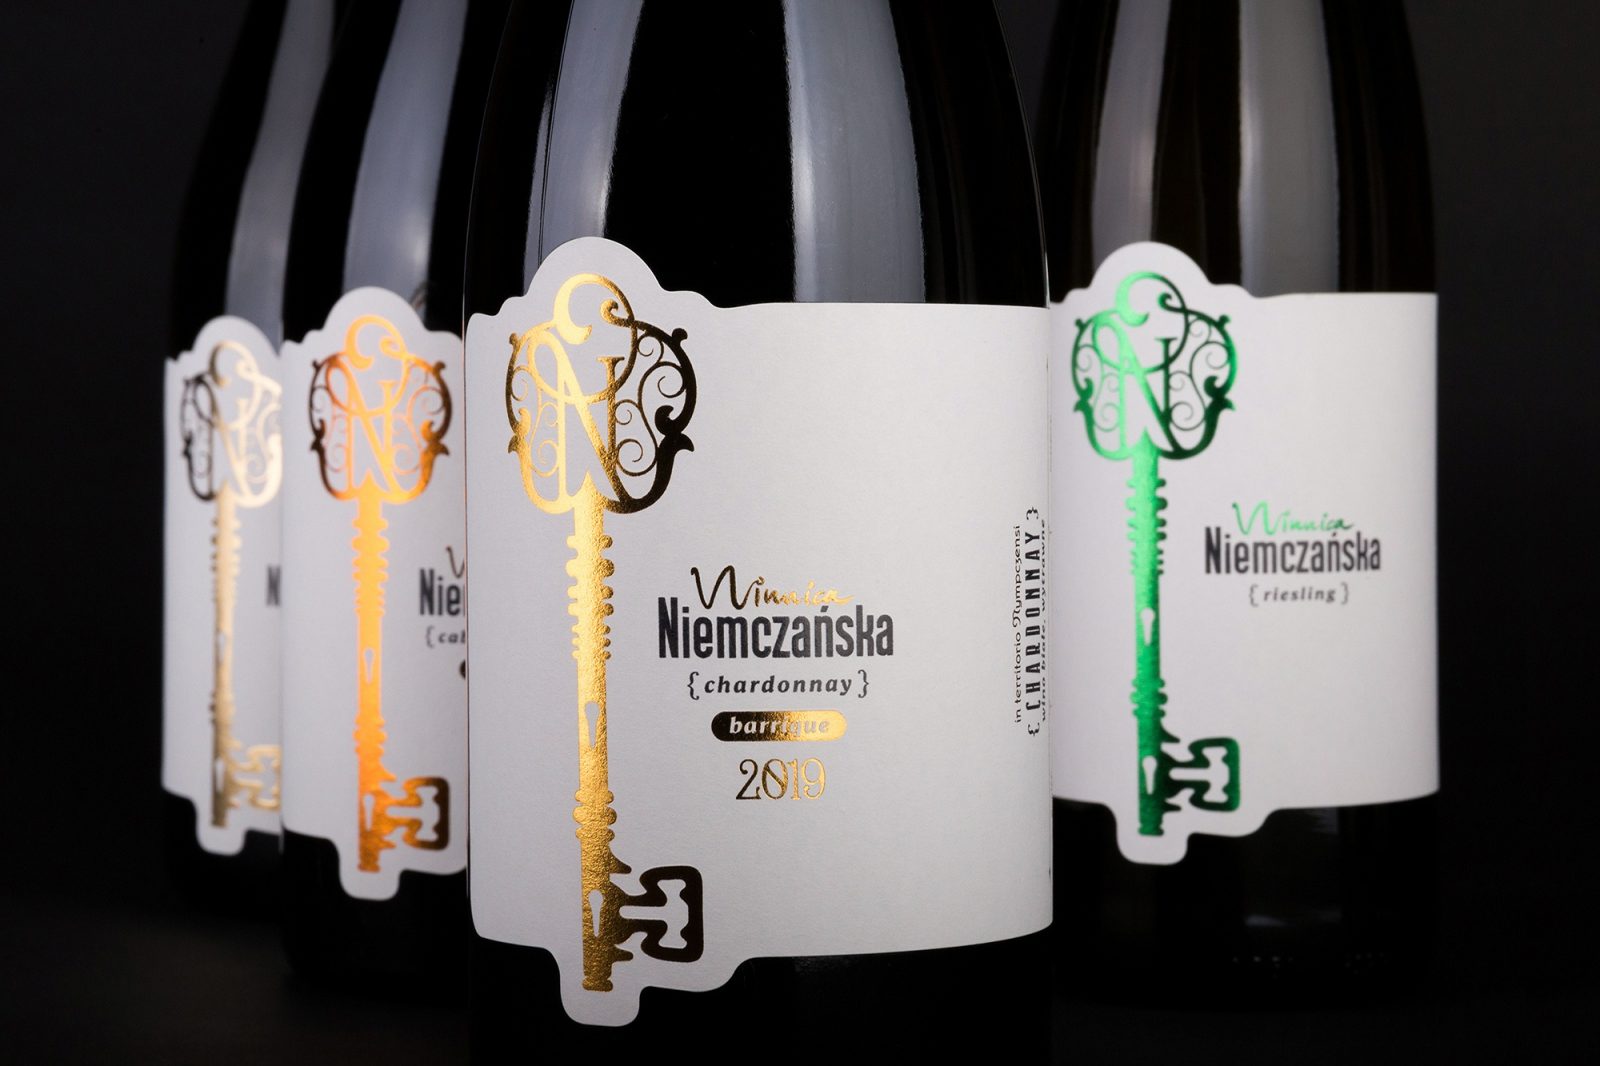 Foxtrot Studio Create Wine Label Range for Winnica Niemczańska